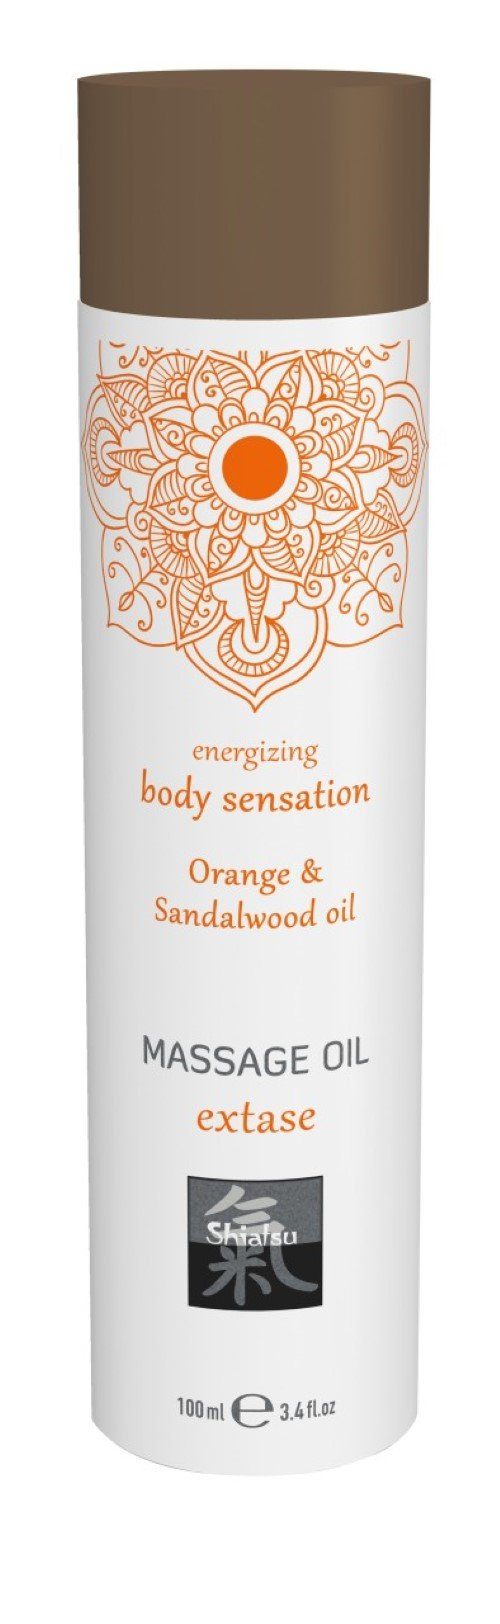 & Gleit- Sandalwood oil Massageöl extase & ml 100 Massage Orange SHIATSU - 100ml Shiatsu HOT